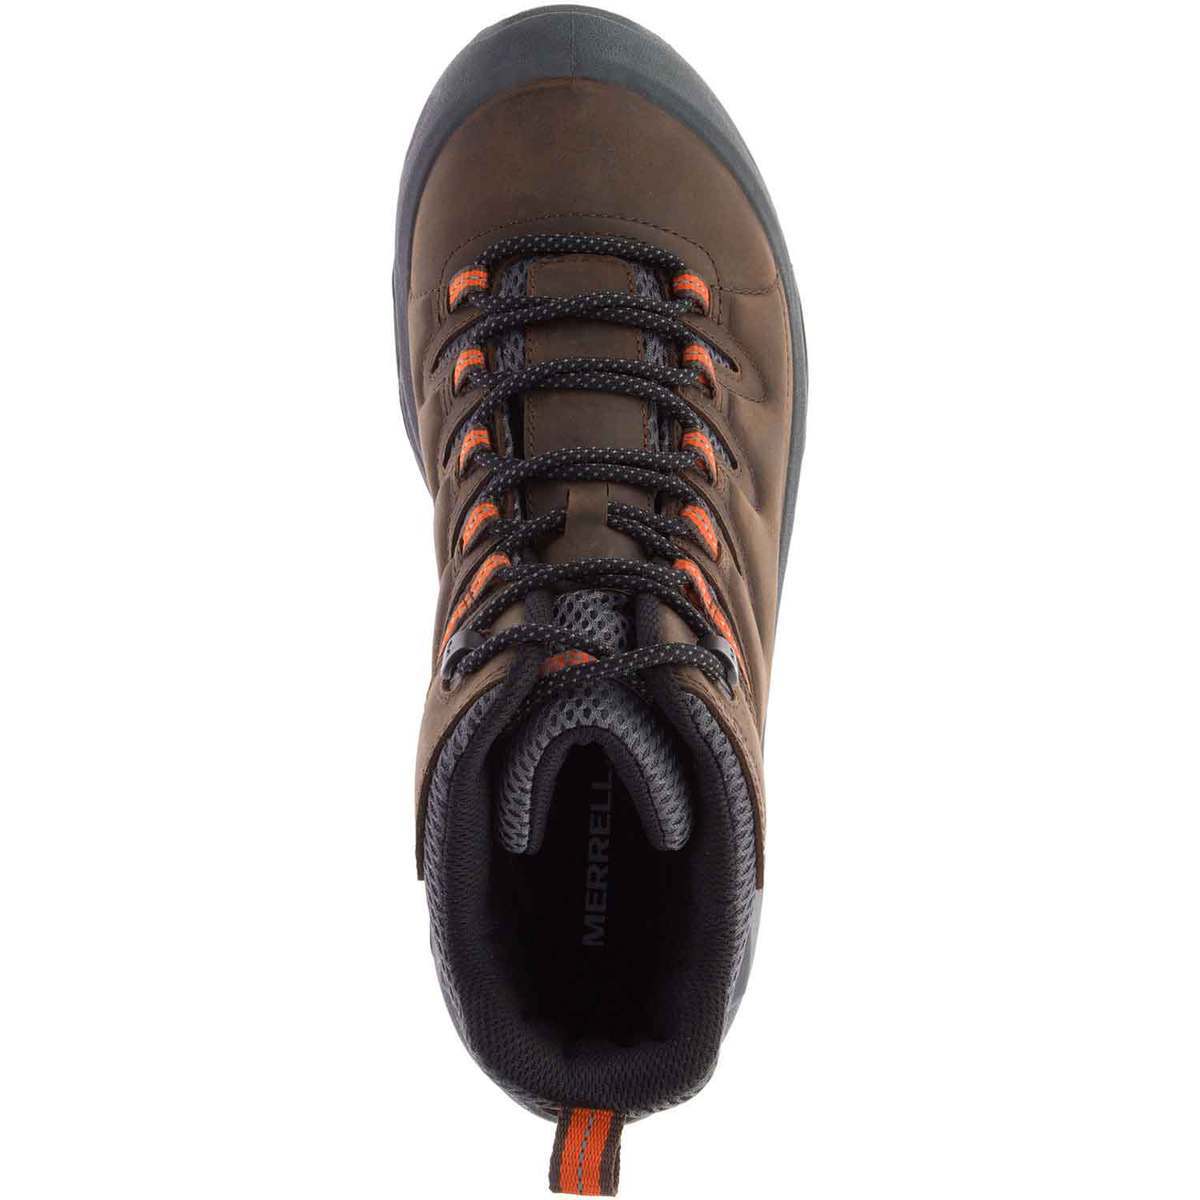 Merrell Men's Strongbound Waterproof Mid Hiking Boots - Espresso - Size ...